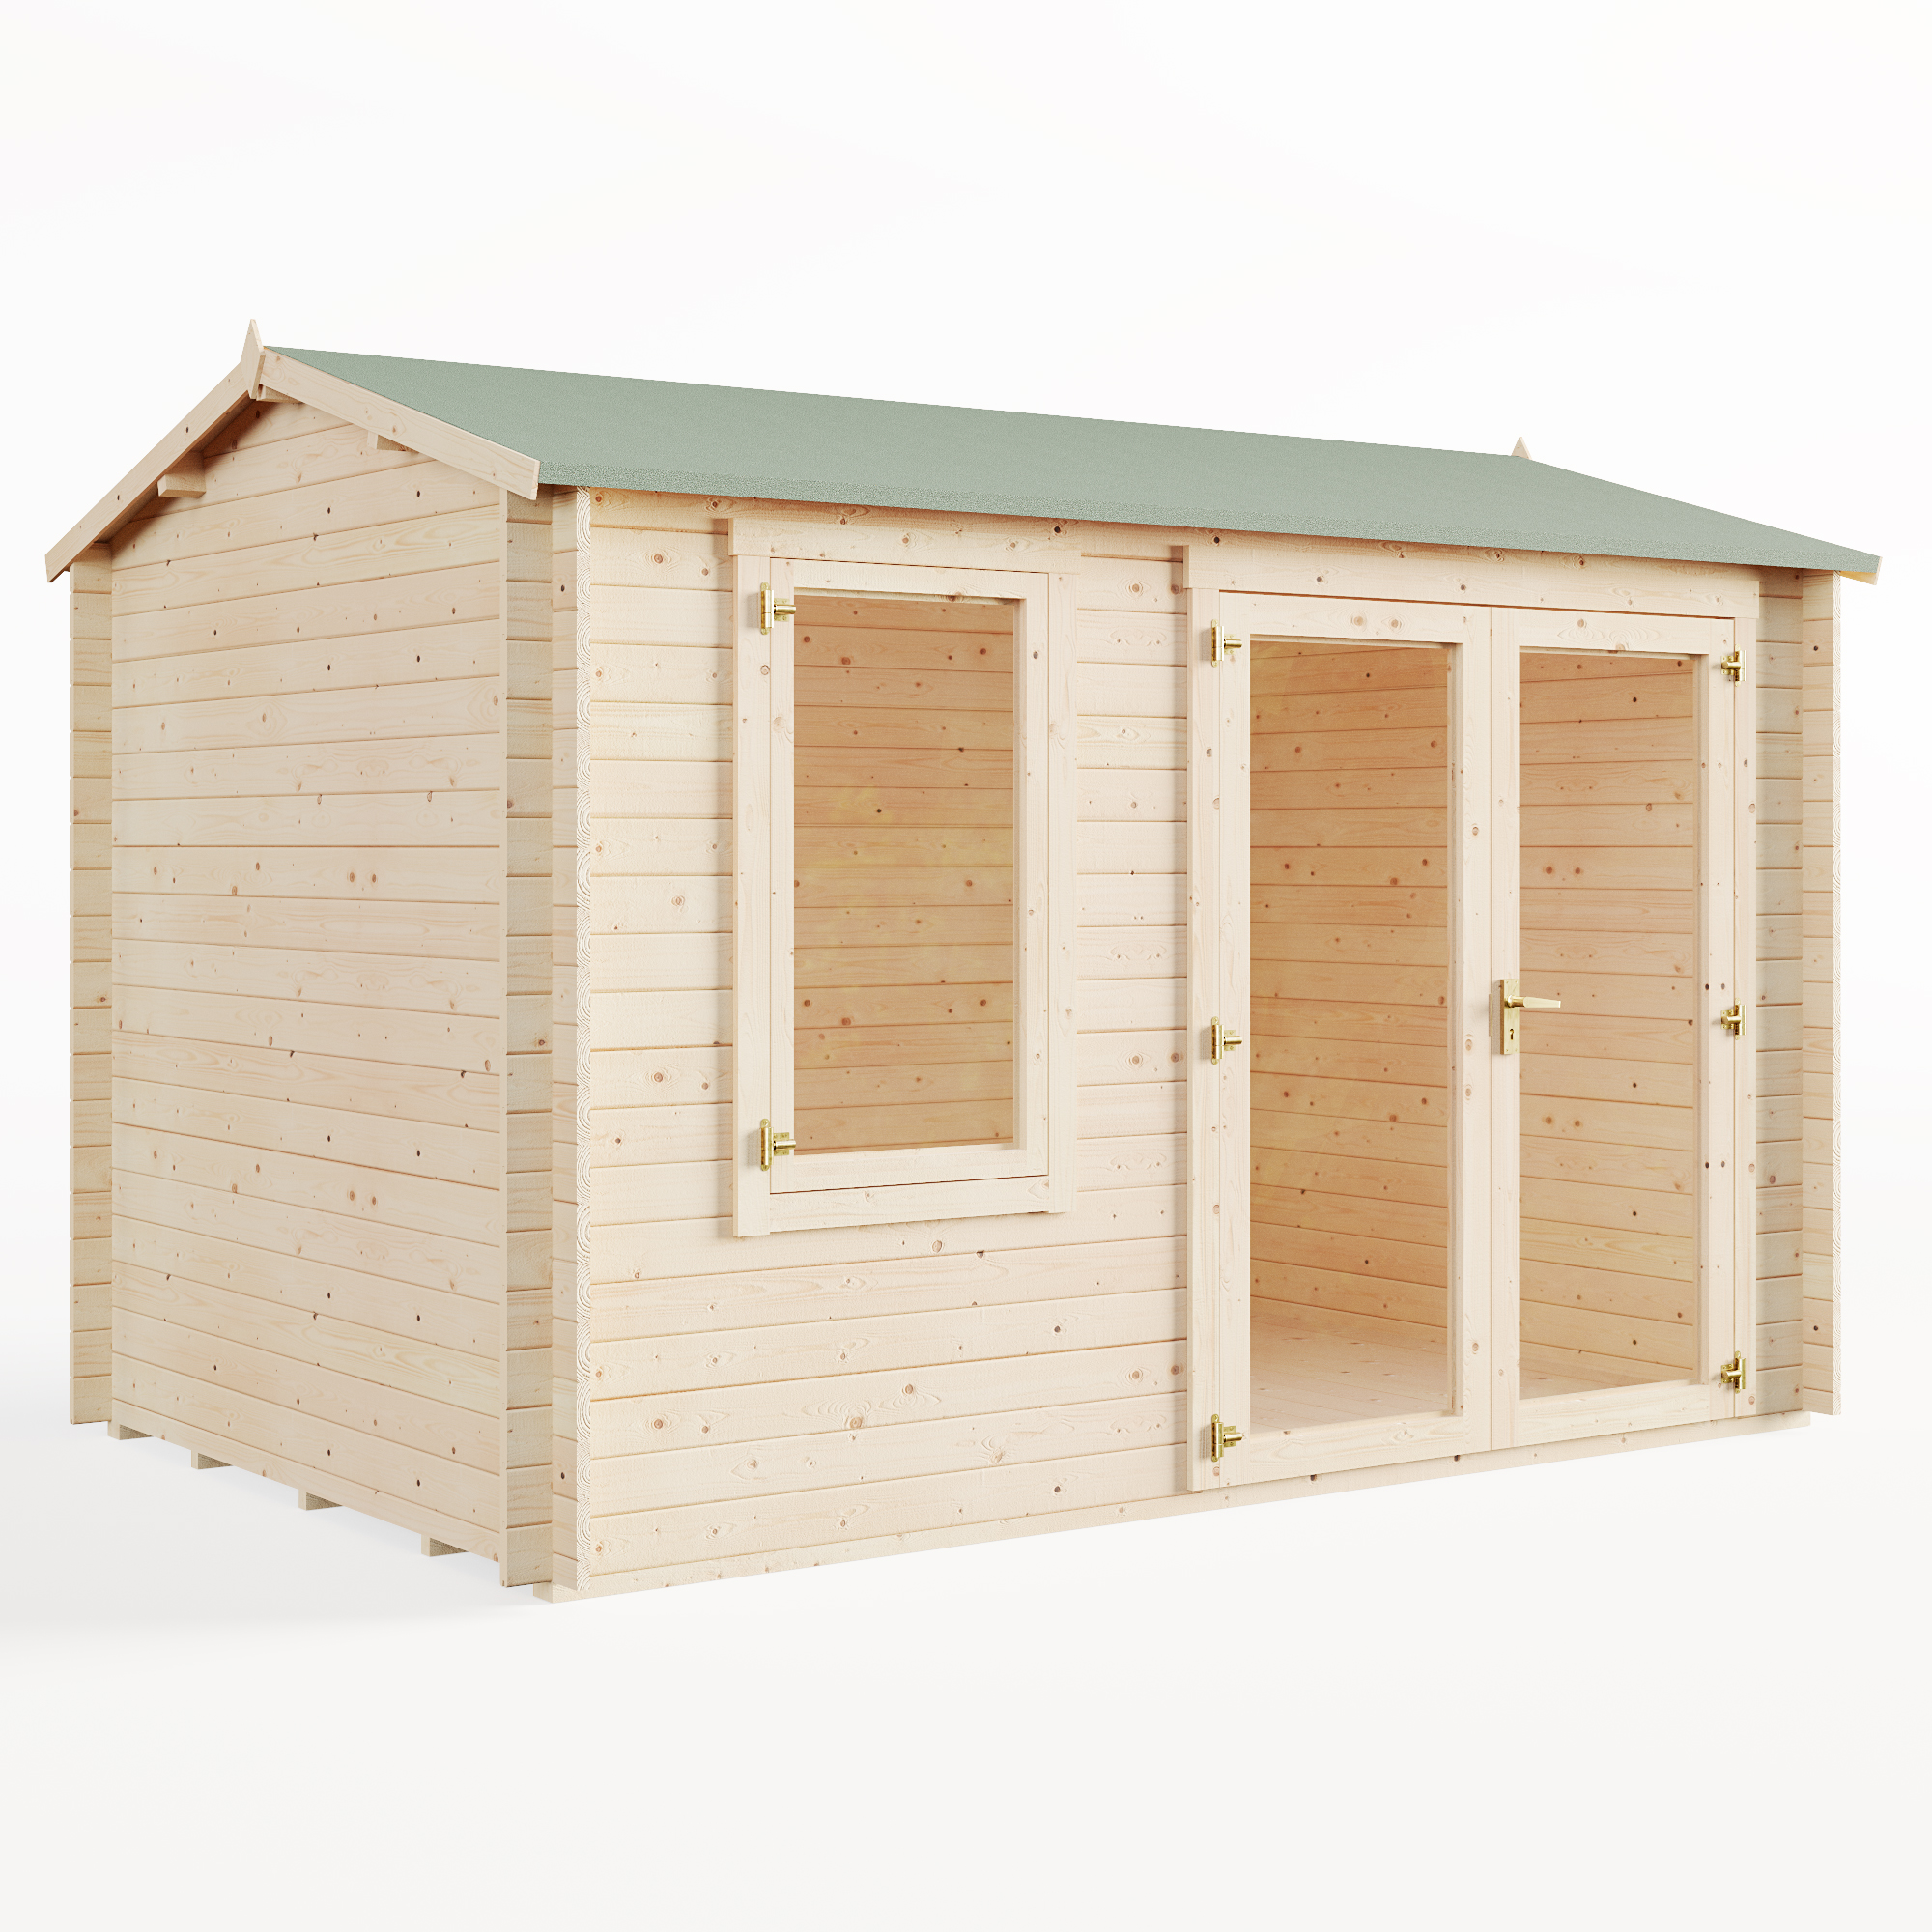 3.5m x 2.5m Pressure Treated Log Cabin - BillyOh Devon Log Cabin - 28mm Tongue & Groove Wooden Garden Building